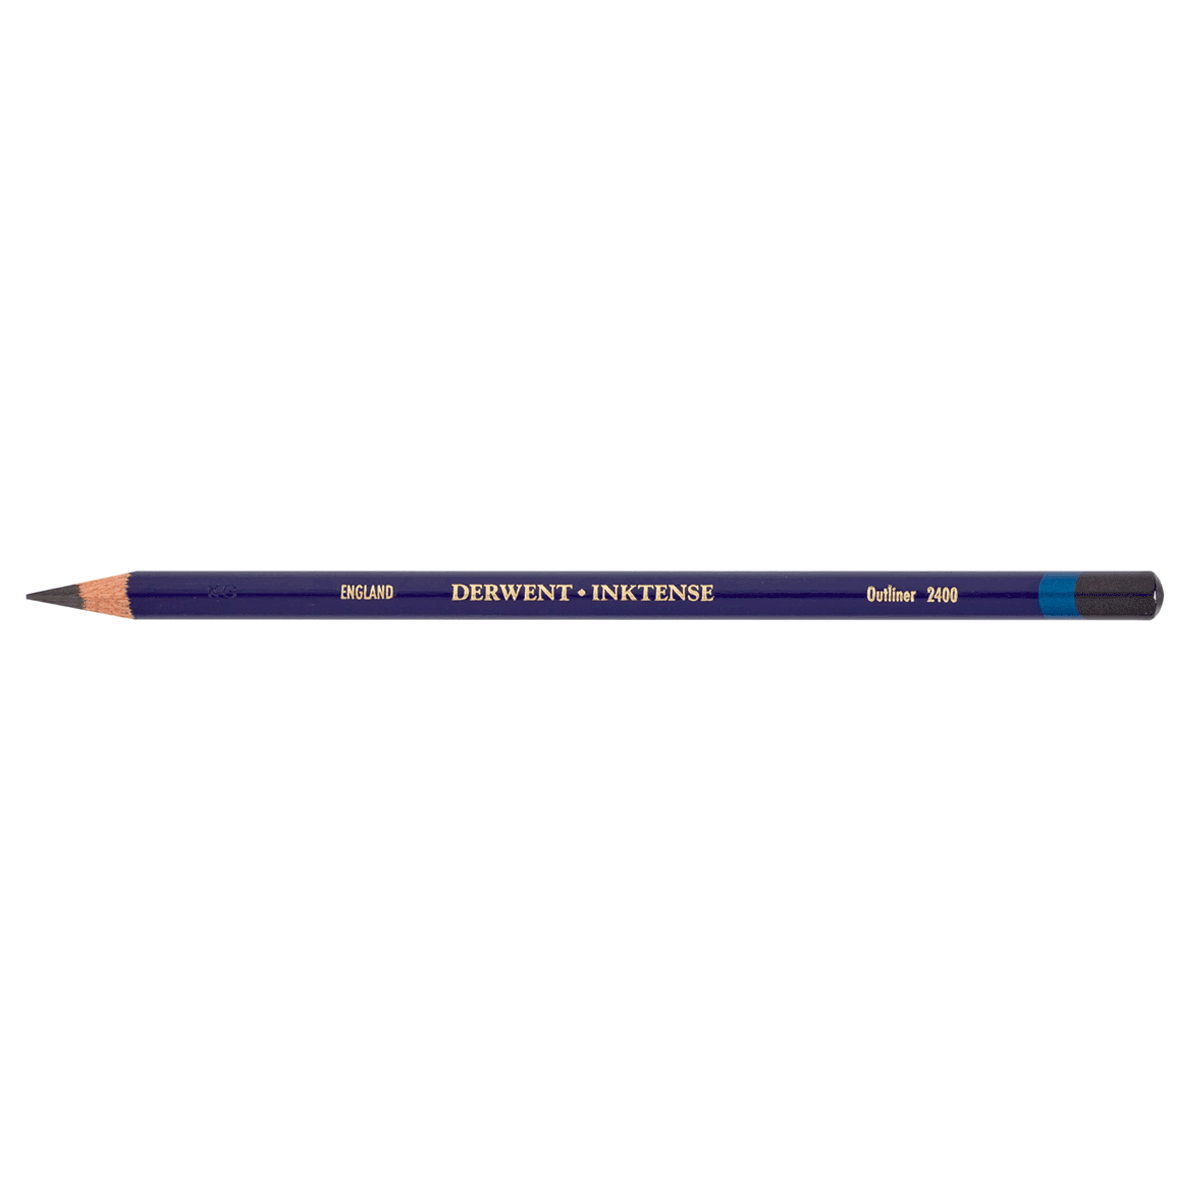 Inktense Pencil 2400 Outliner